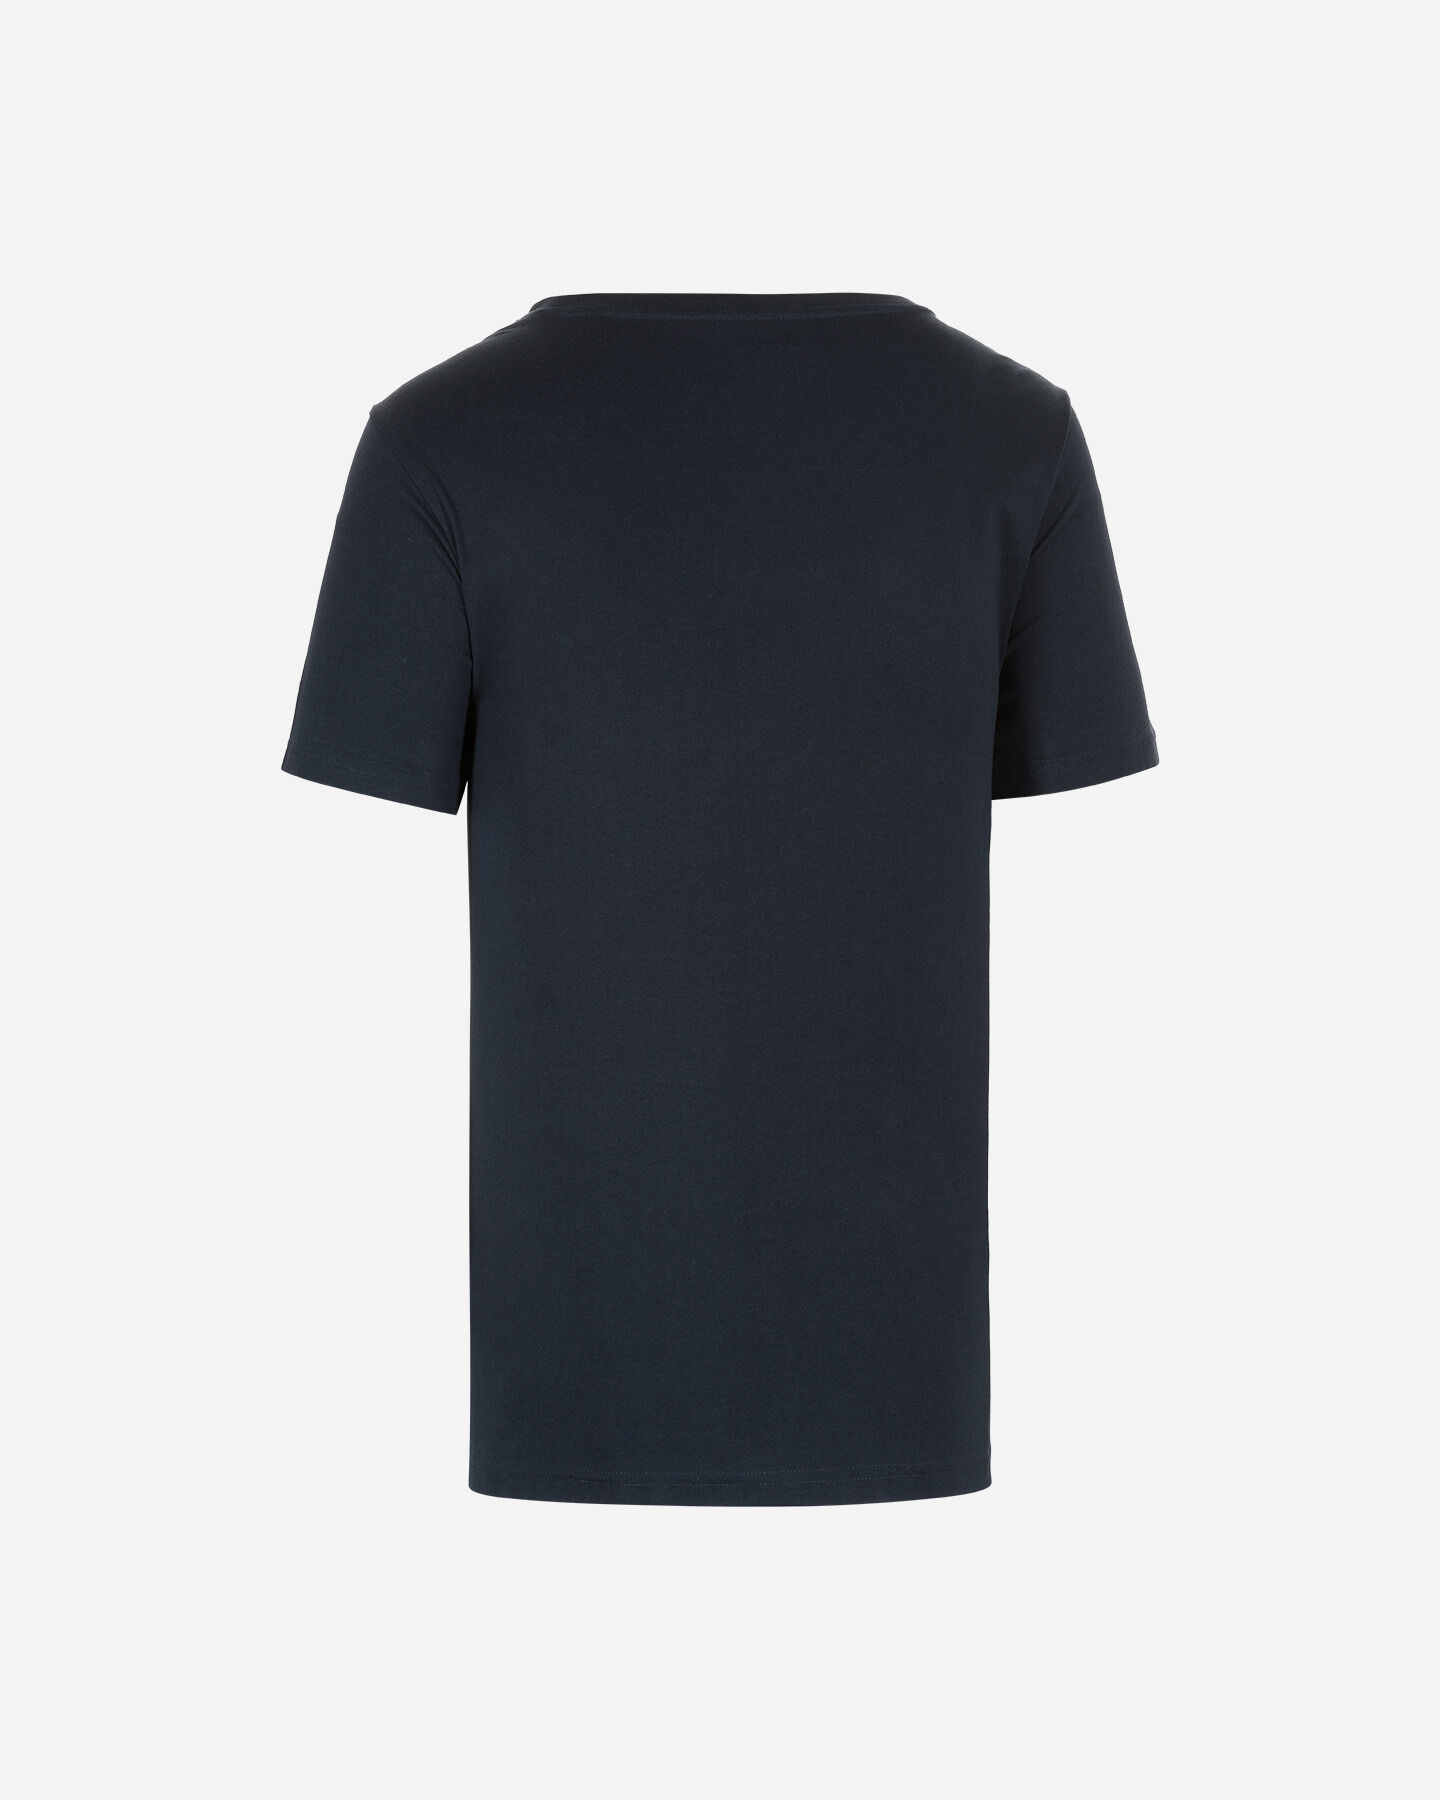  T-Shirt BEAR BIG LOGO M S4077490|0800|S scatto 1